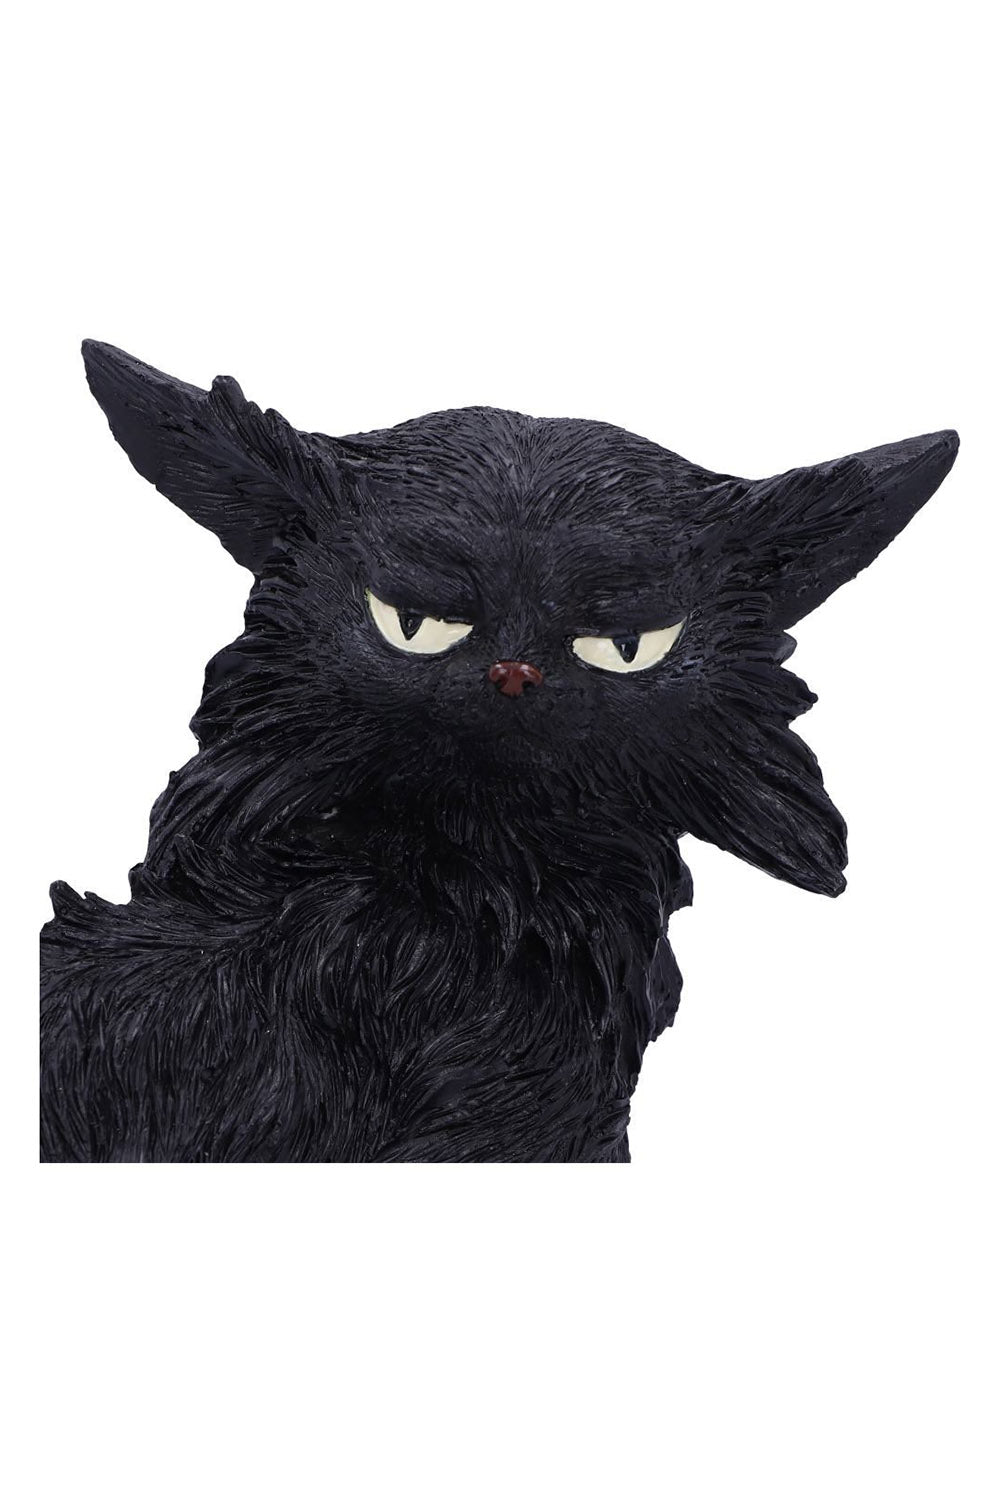 Salem the Black Cat Statue